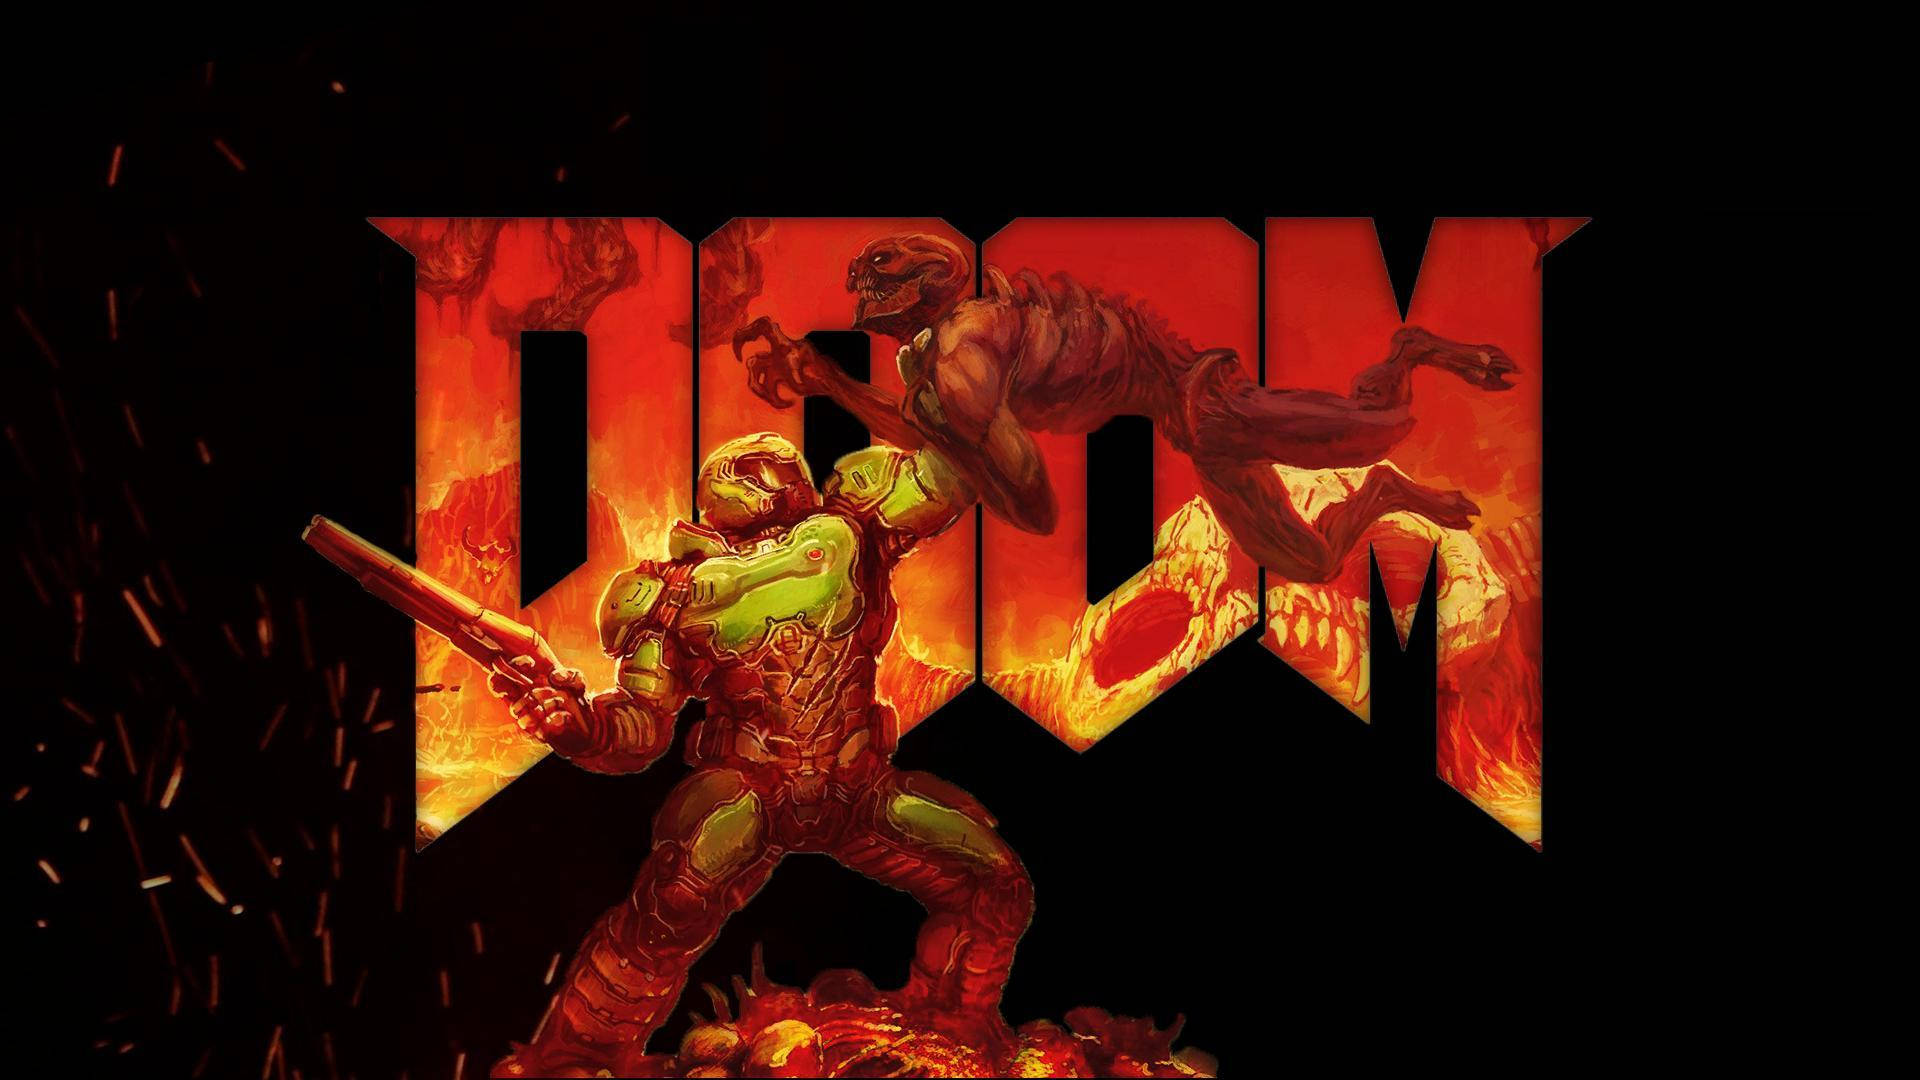 Doom Hd Game Title Background